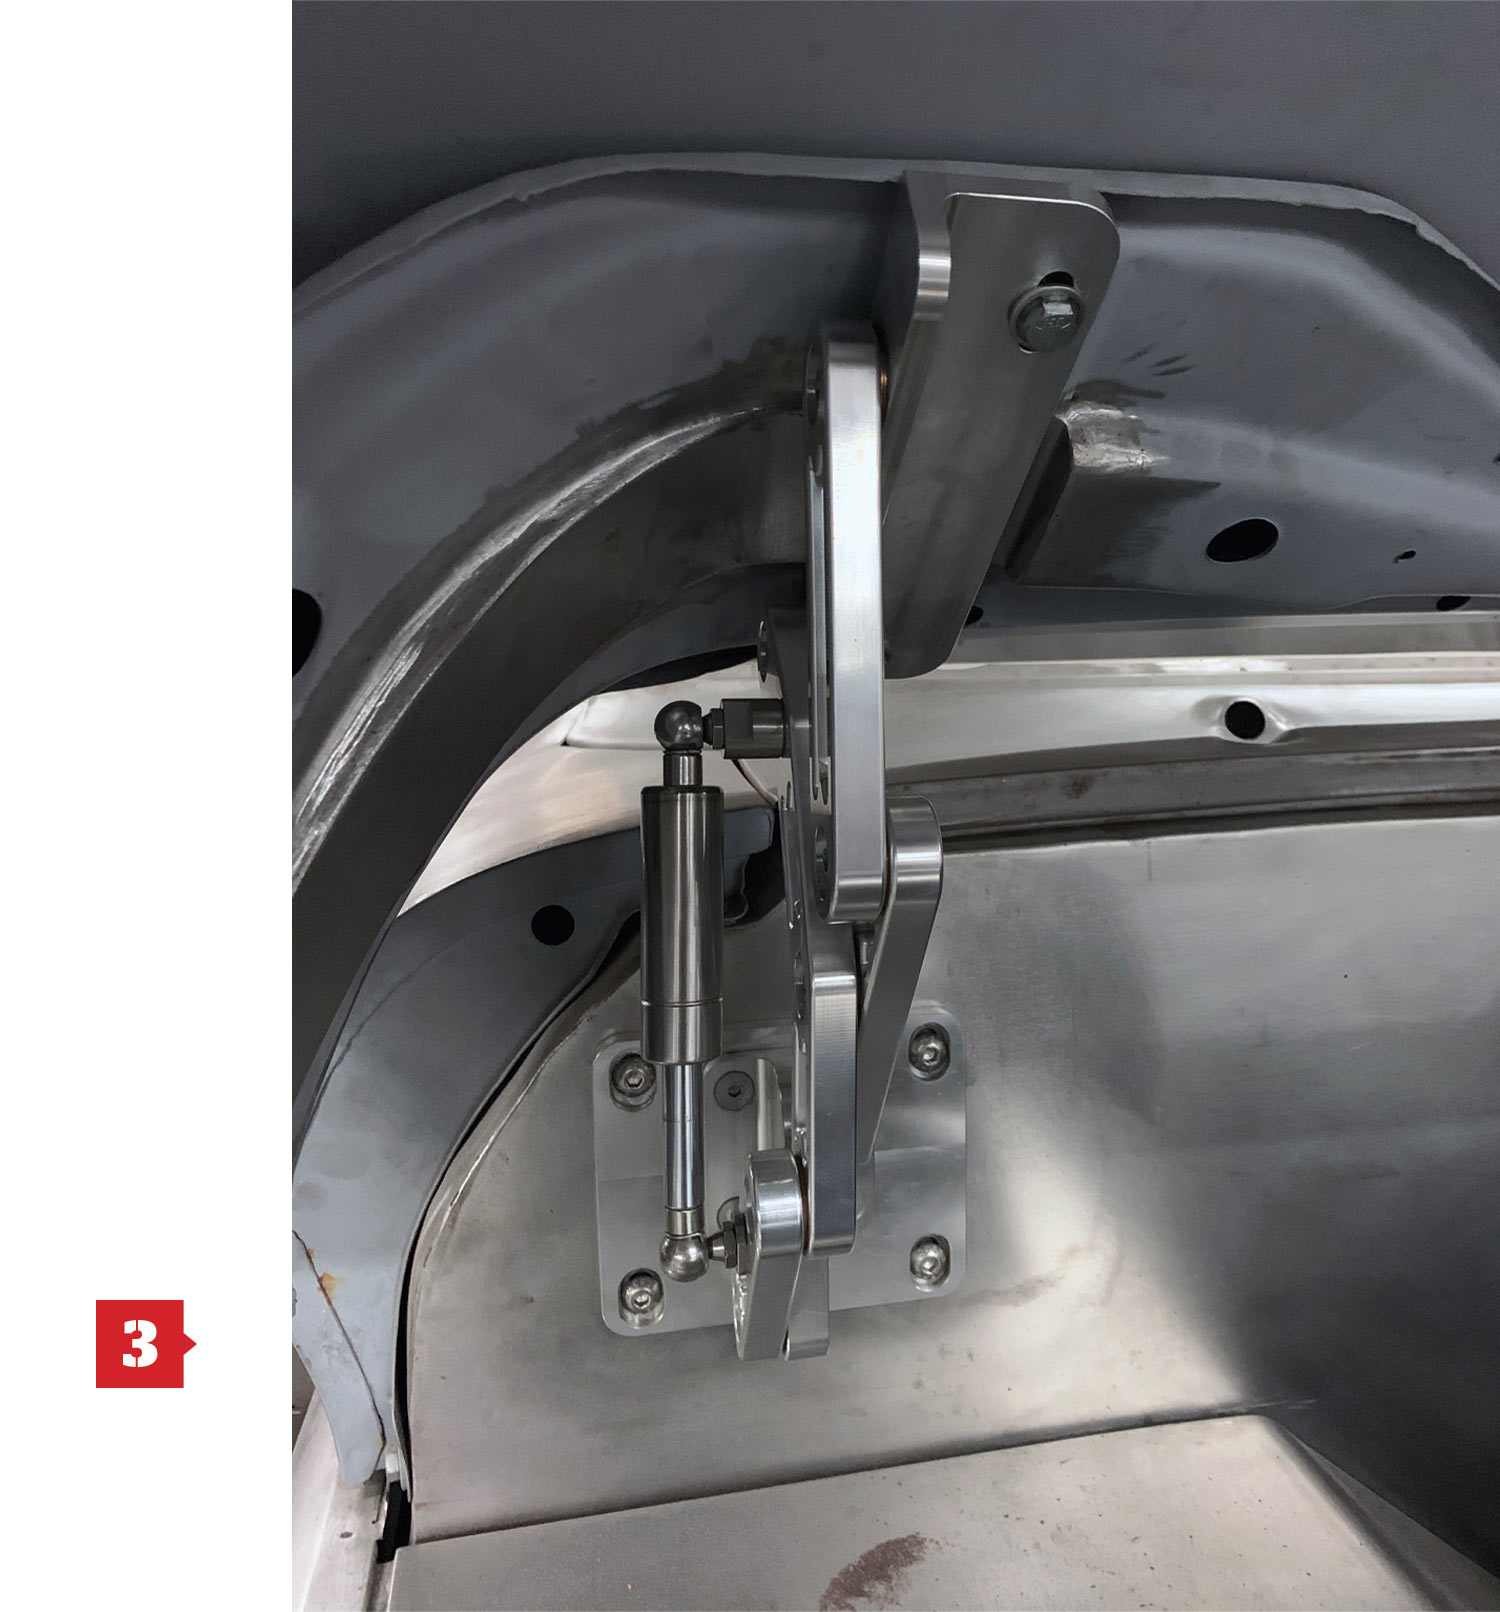 Scott’s Hotrods’ 100 percent American-made CNC Billet LowPro C10 hood hinge installed on a car